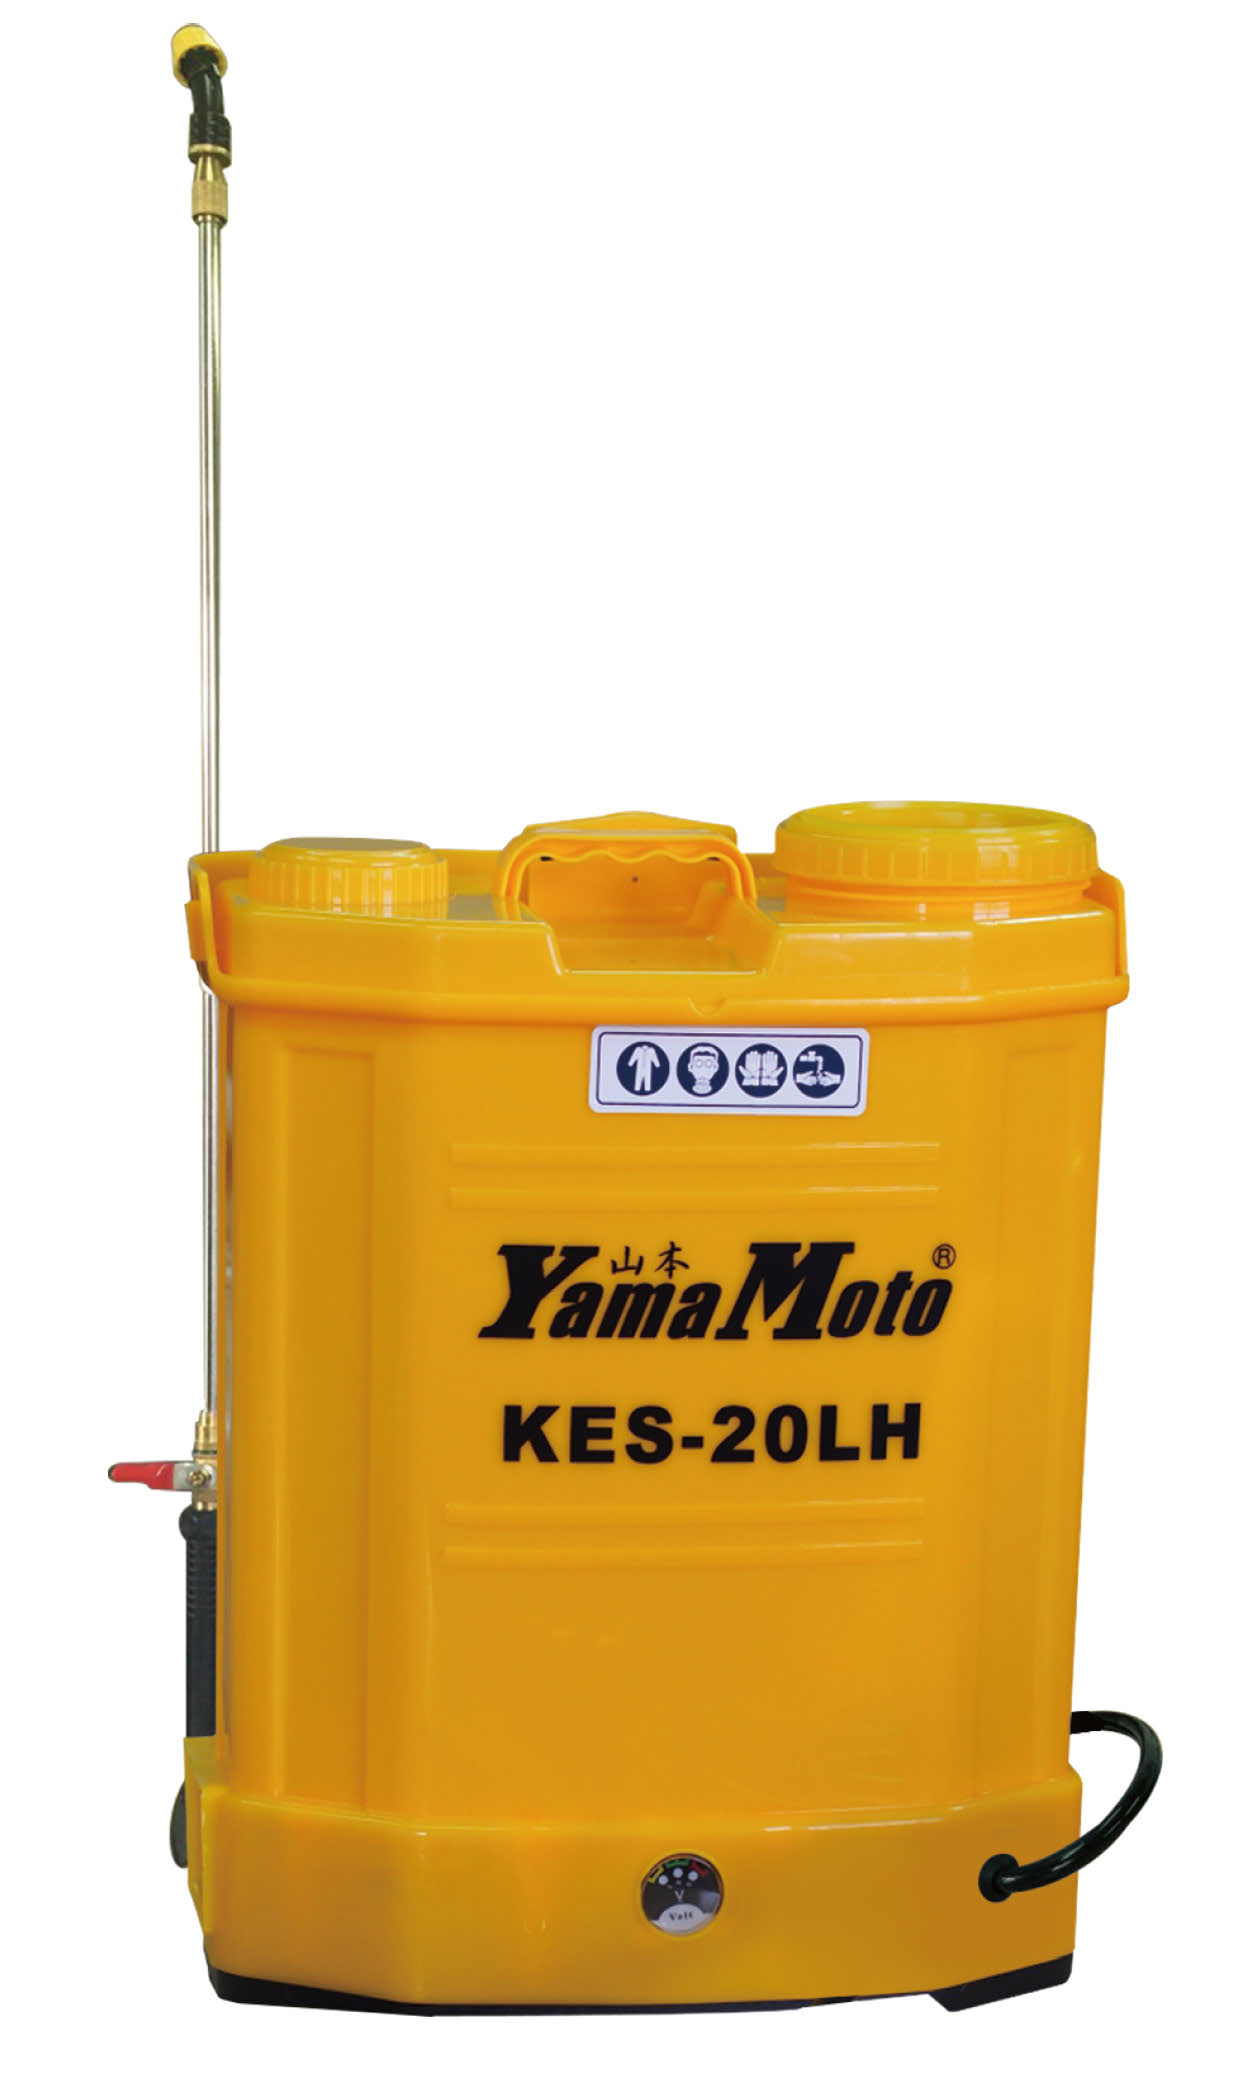 KES-16LH、20LH Knapsack Electric Sprayer